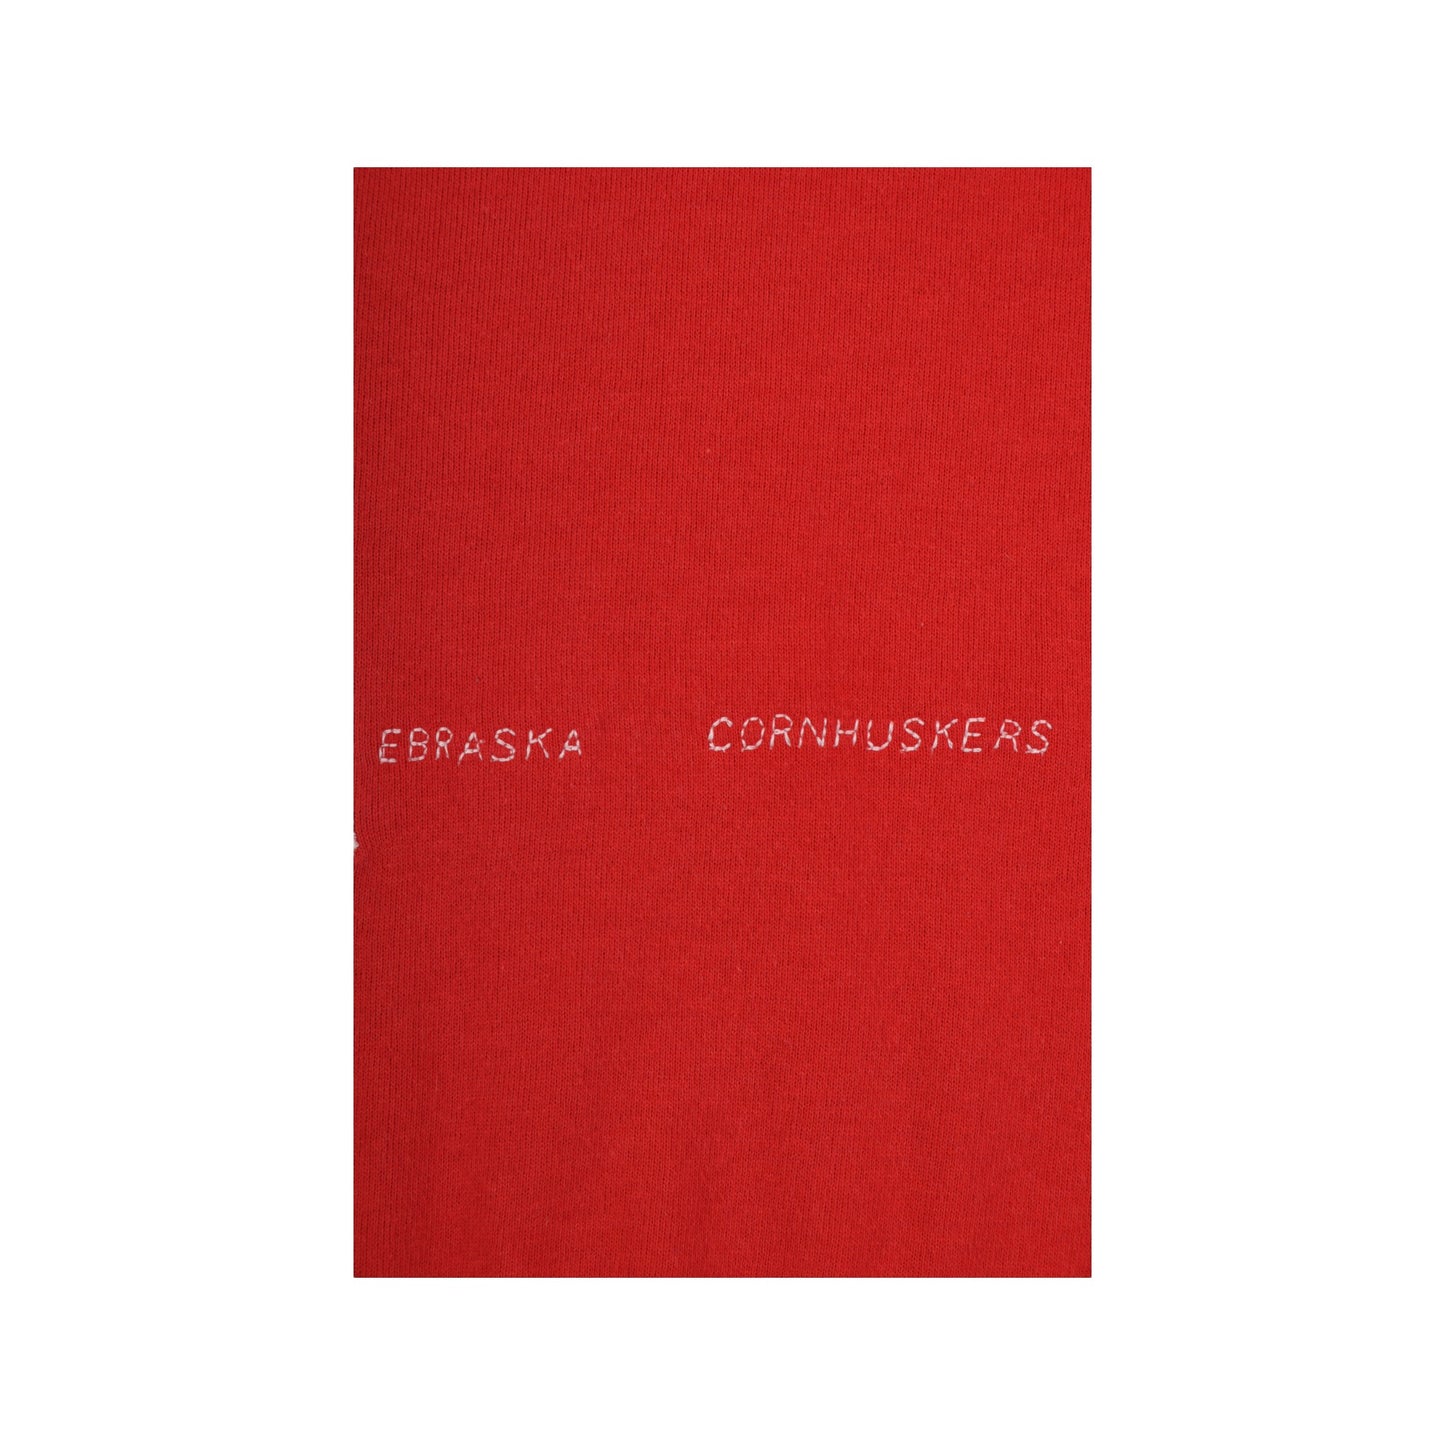 Vintage Nebraska Cornhuskers Crew Neck Sweatshirt Red Ladies Small